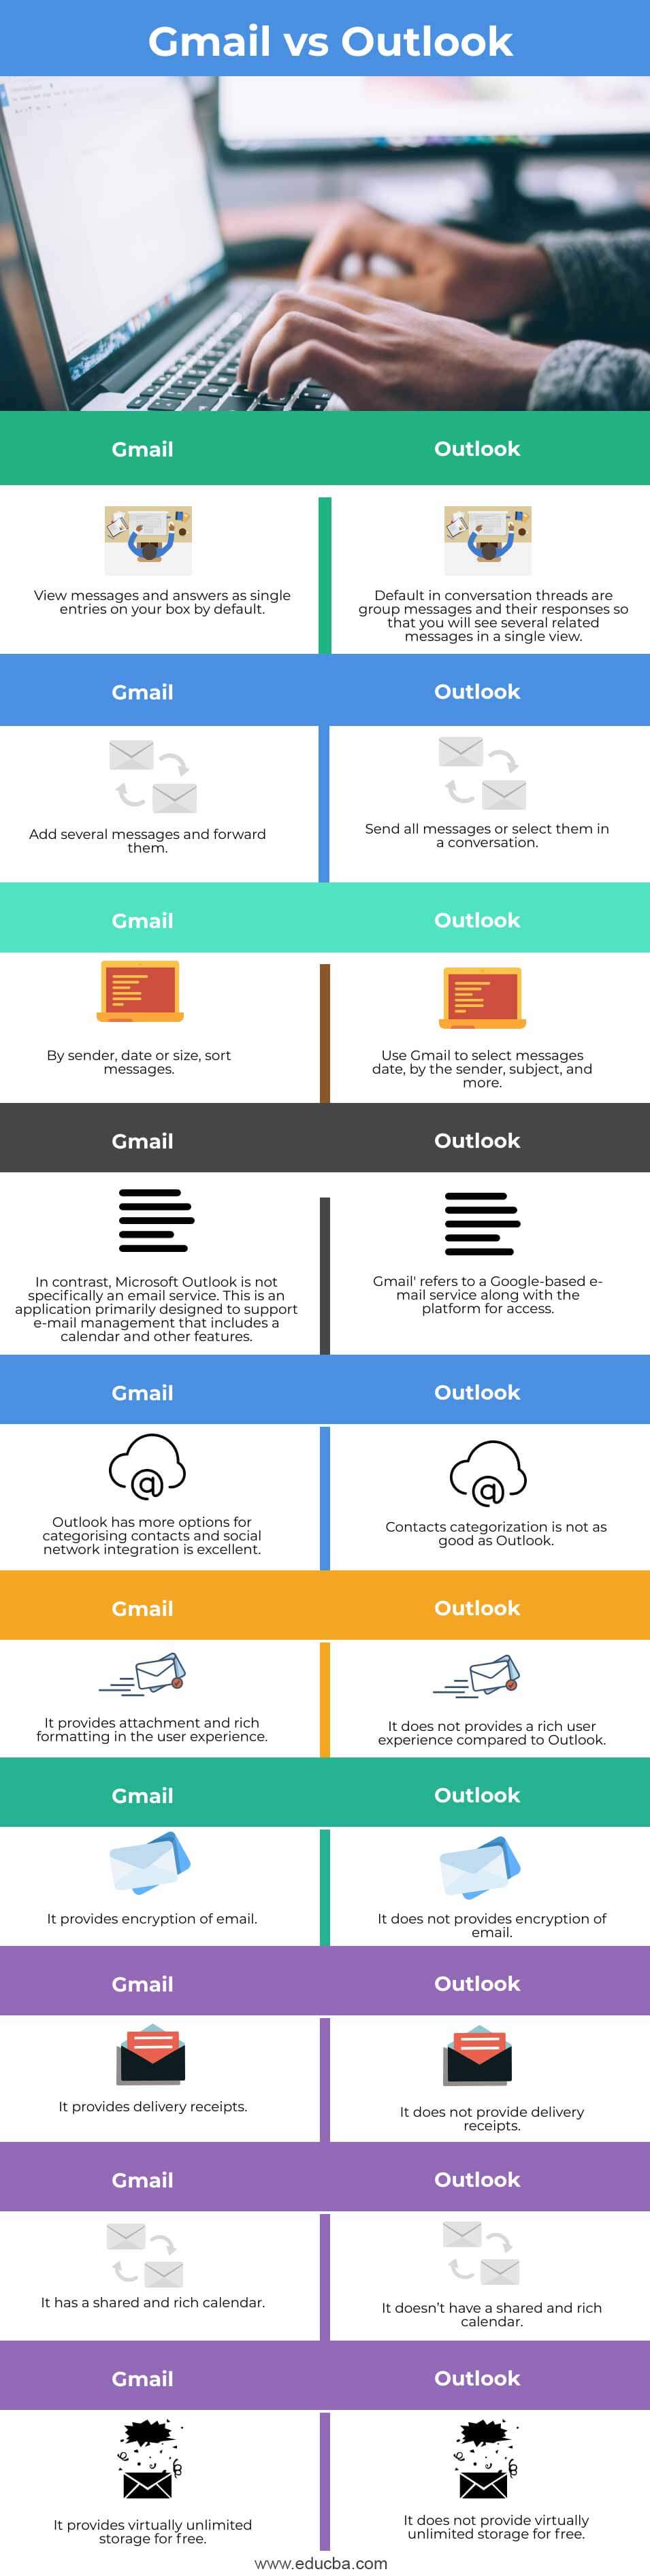 Gmail-vs-Outlook-info